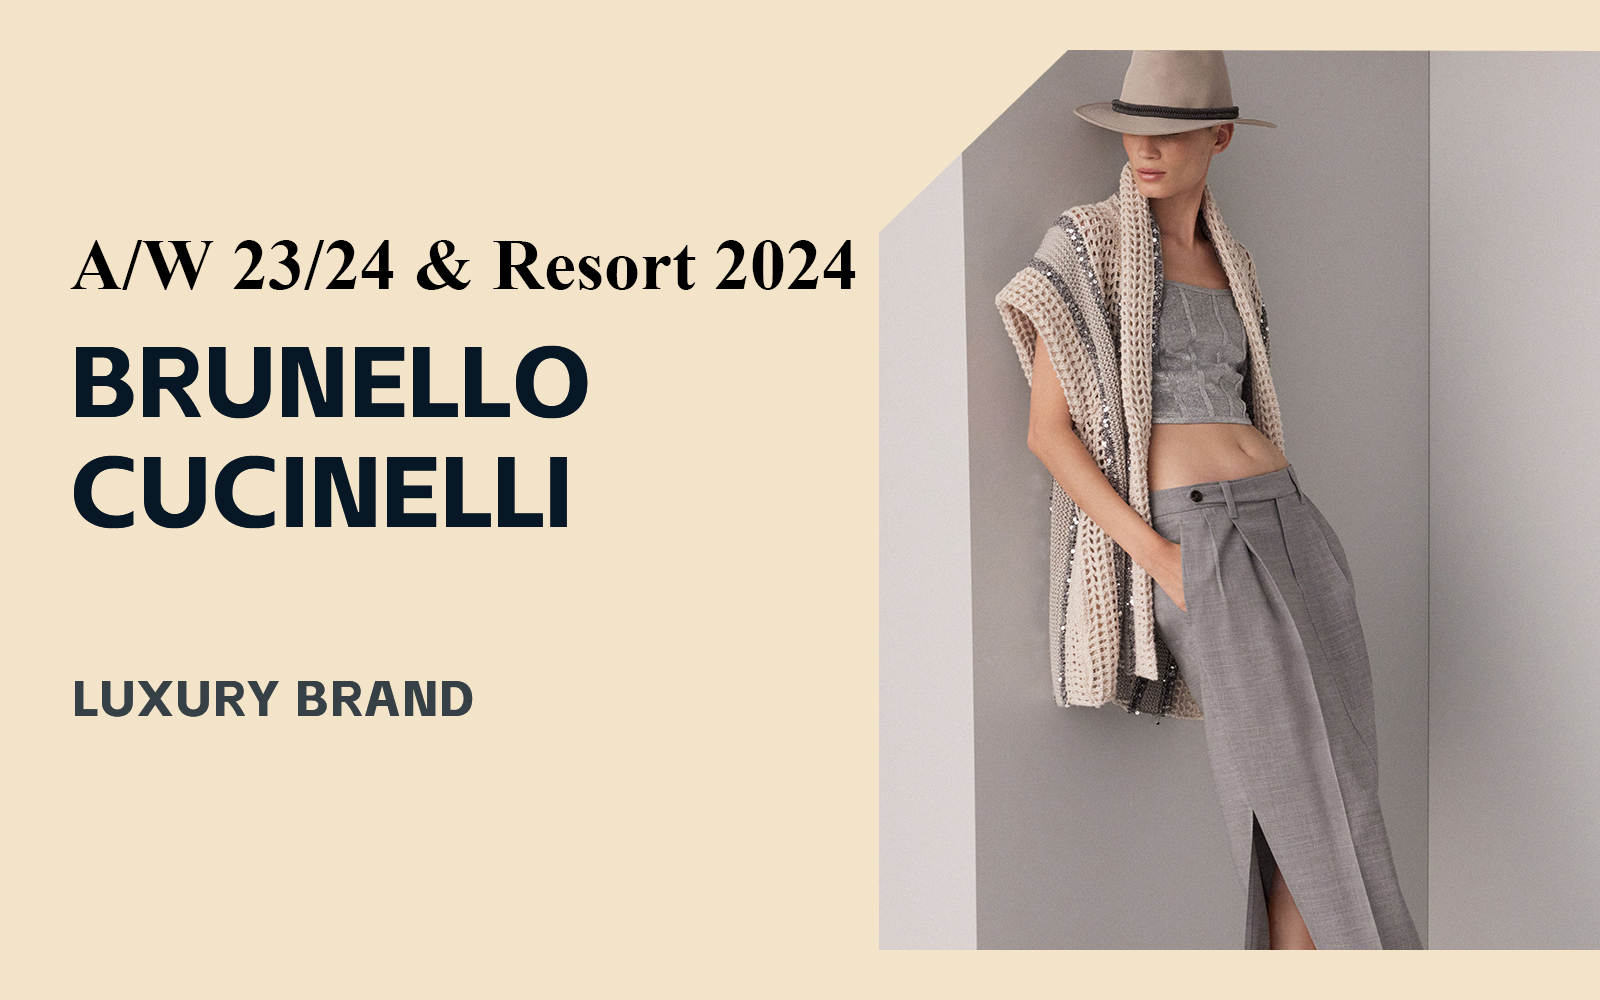 Light Luxury and Minimalism -- The Analysis of Brunello Cucinelli The Luxury Brand